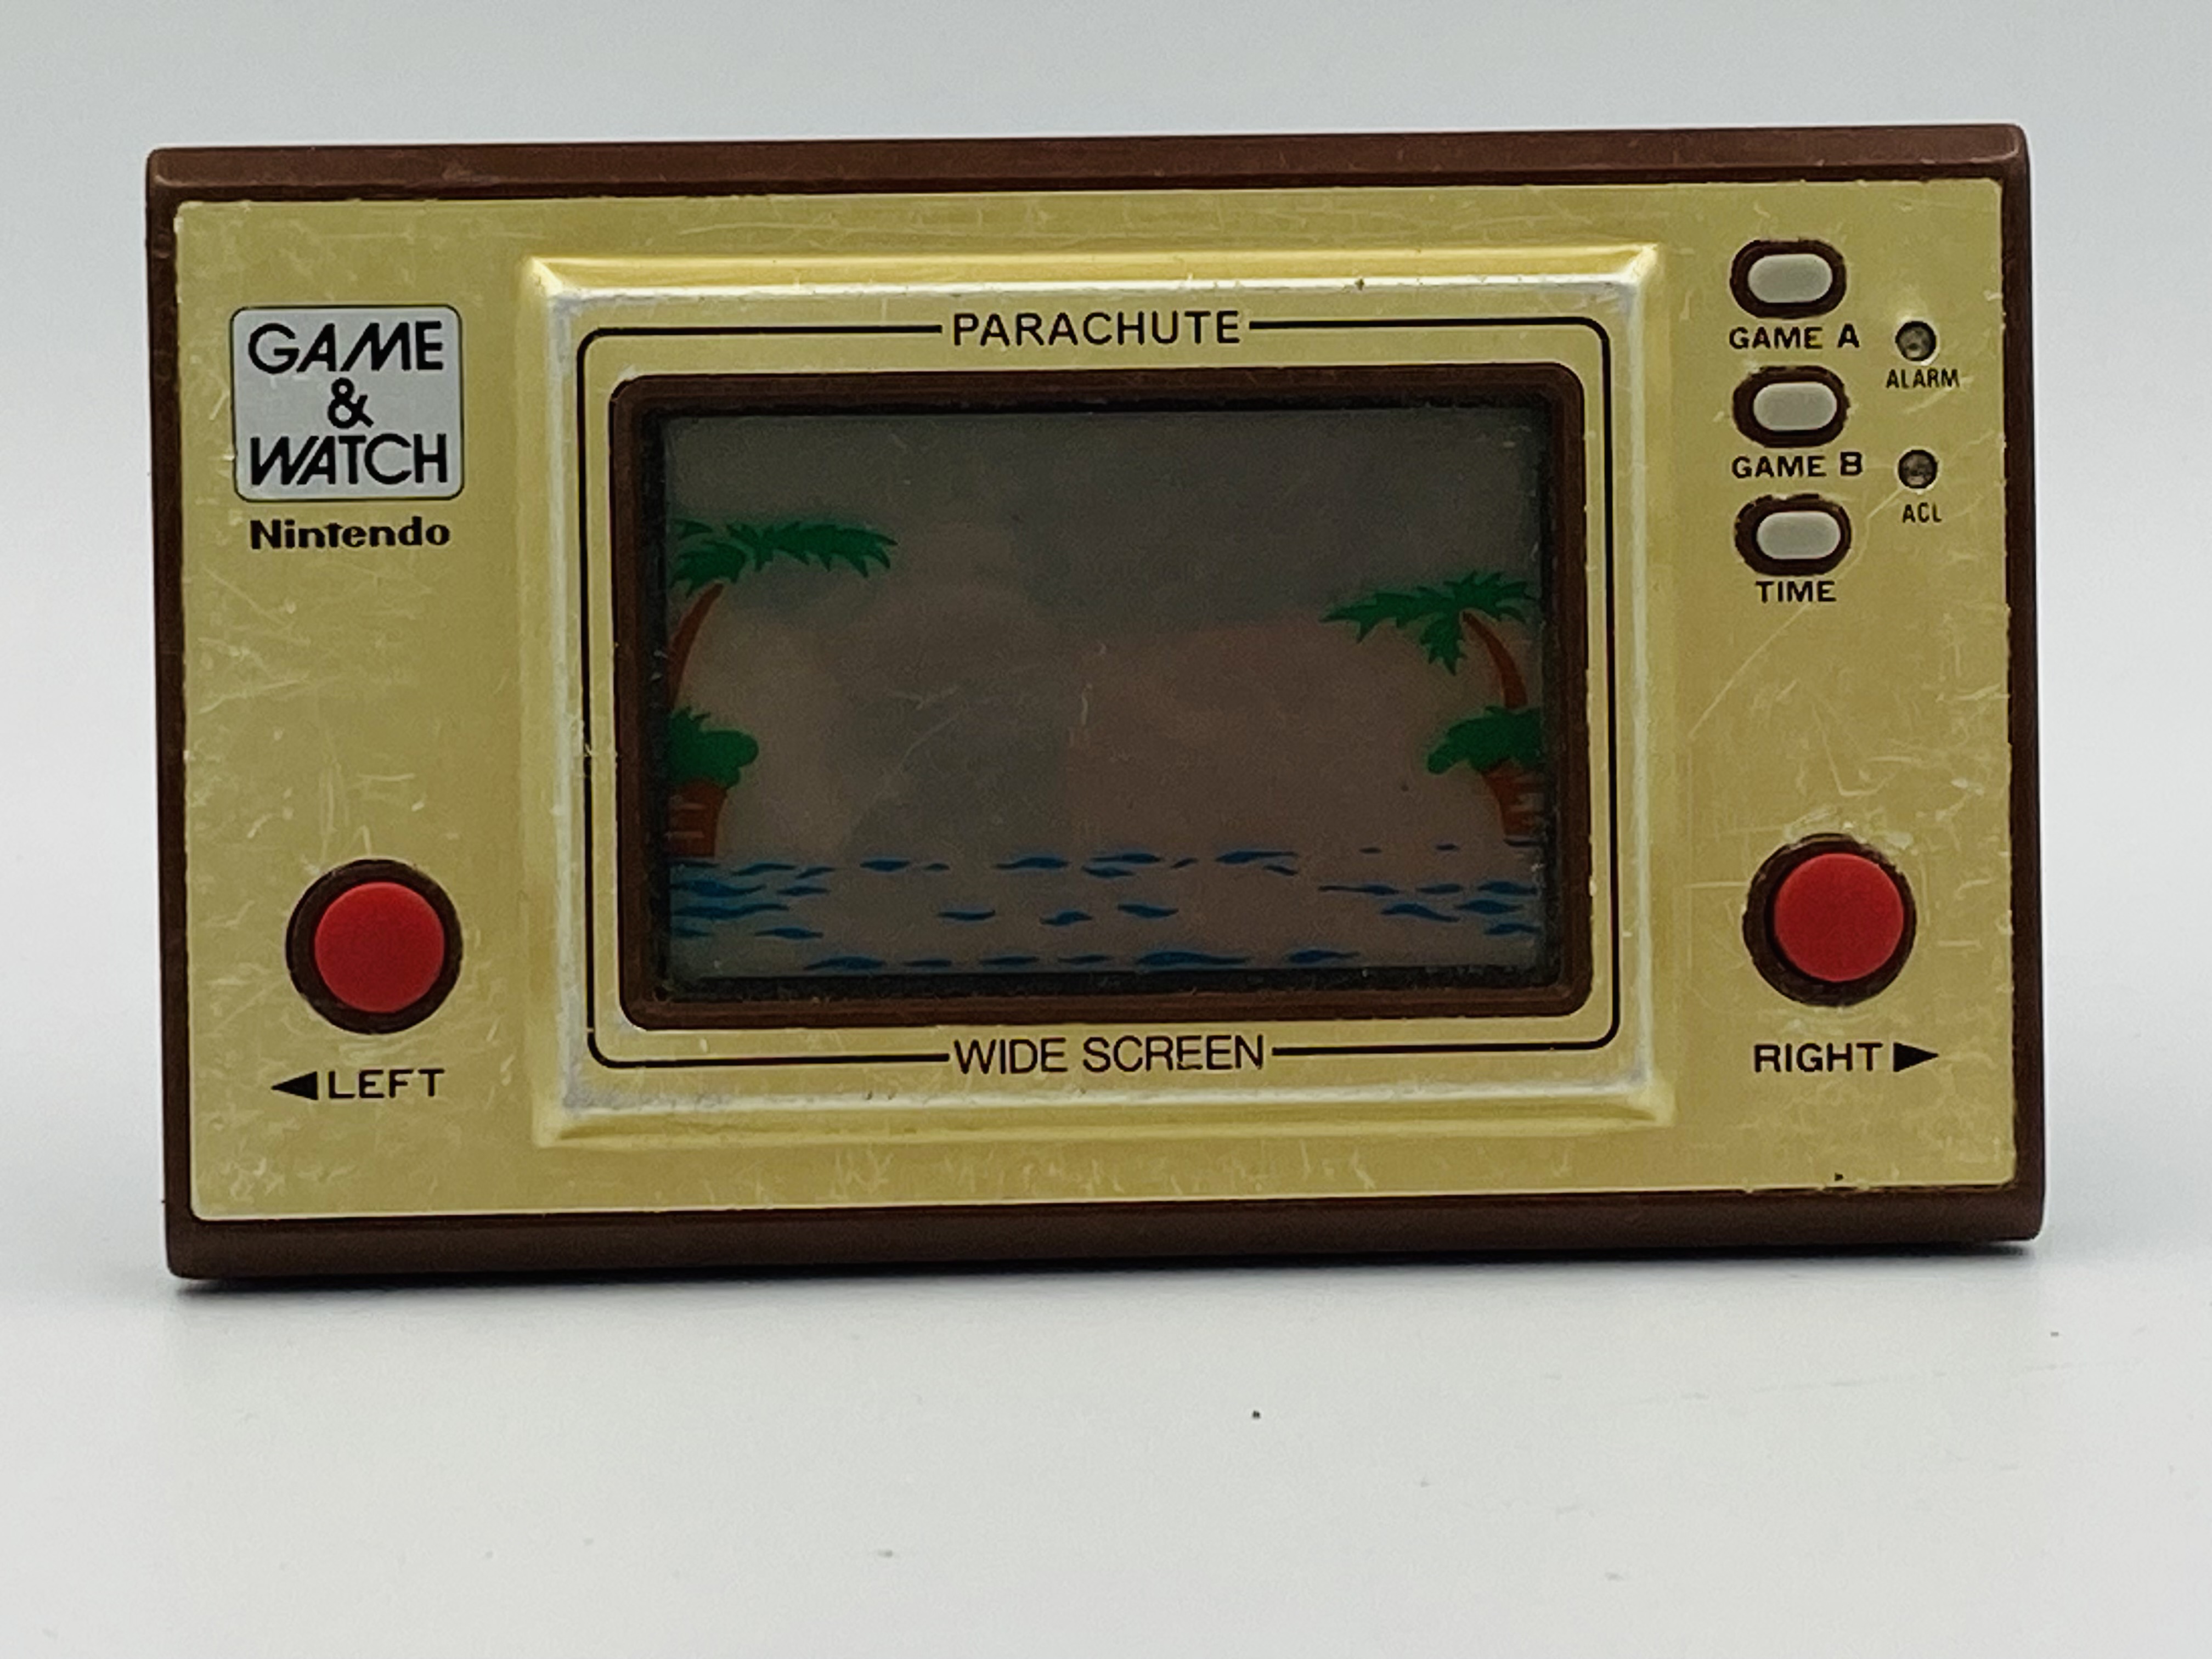 Nintendo Game & Watch Parachute, model PR-21 - Image 2 of 3